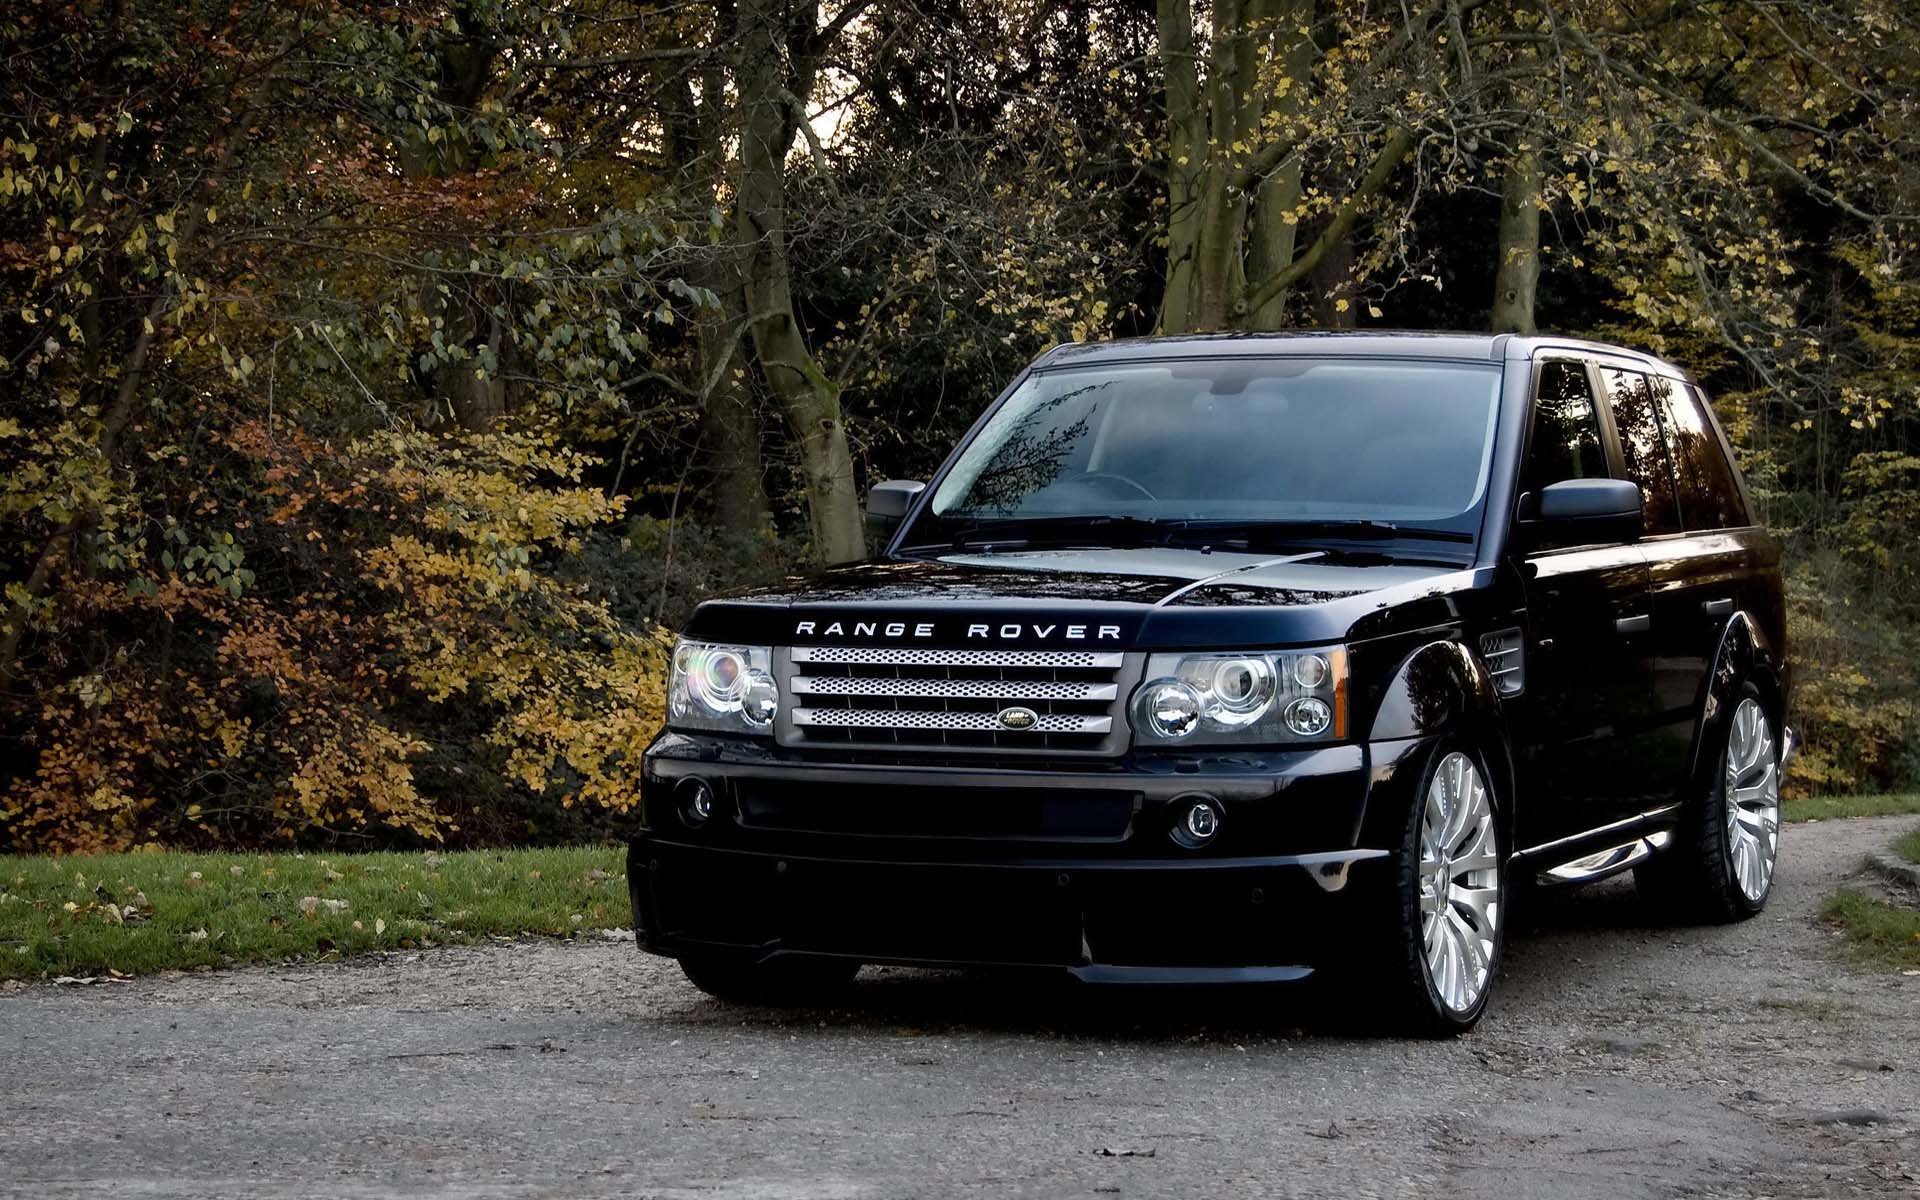  Range Rover HQ Background Images